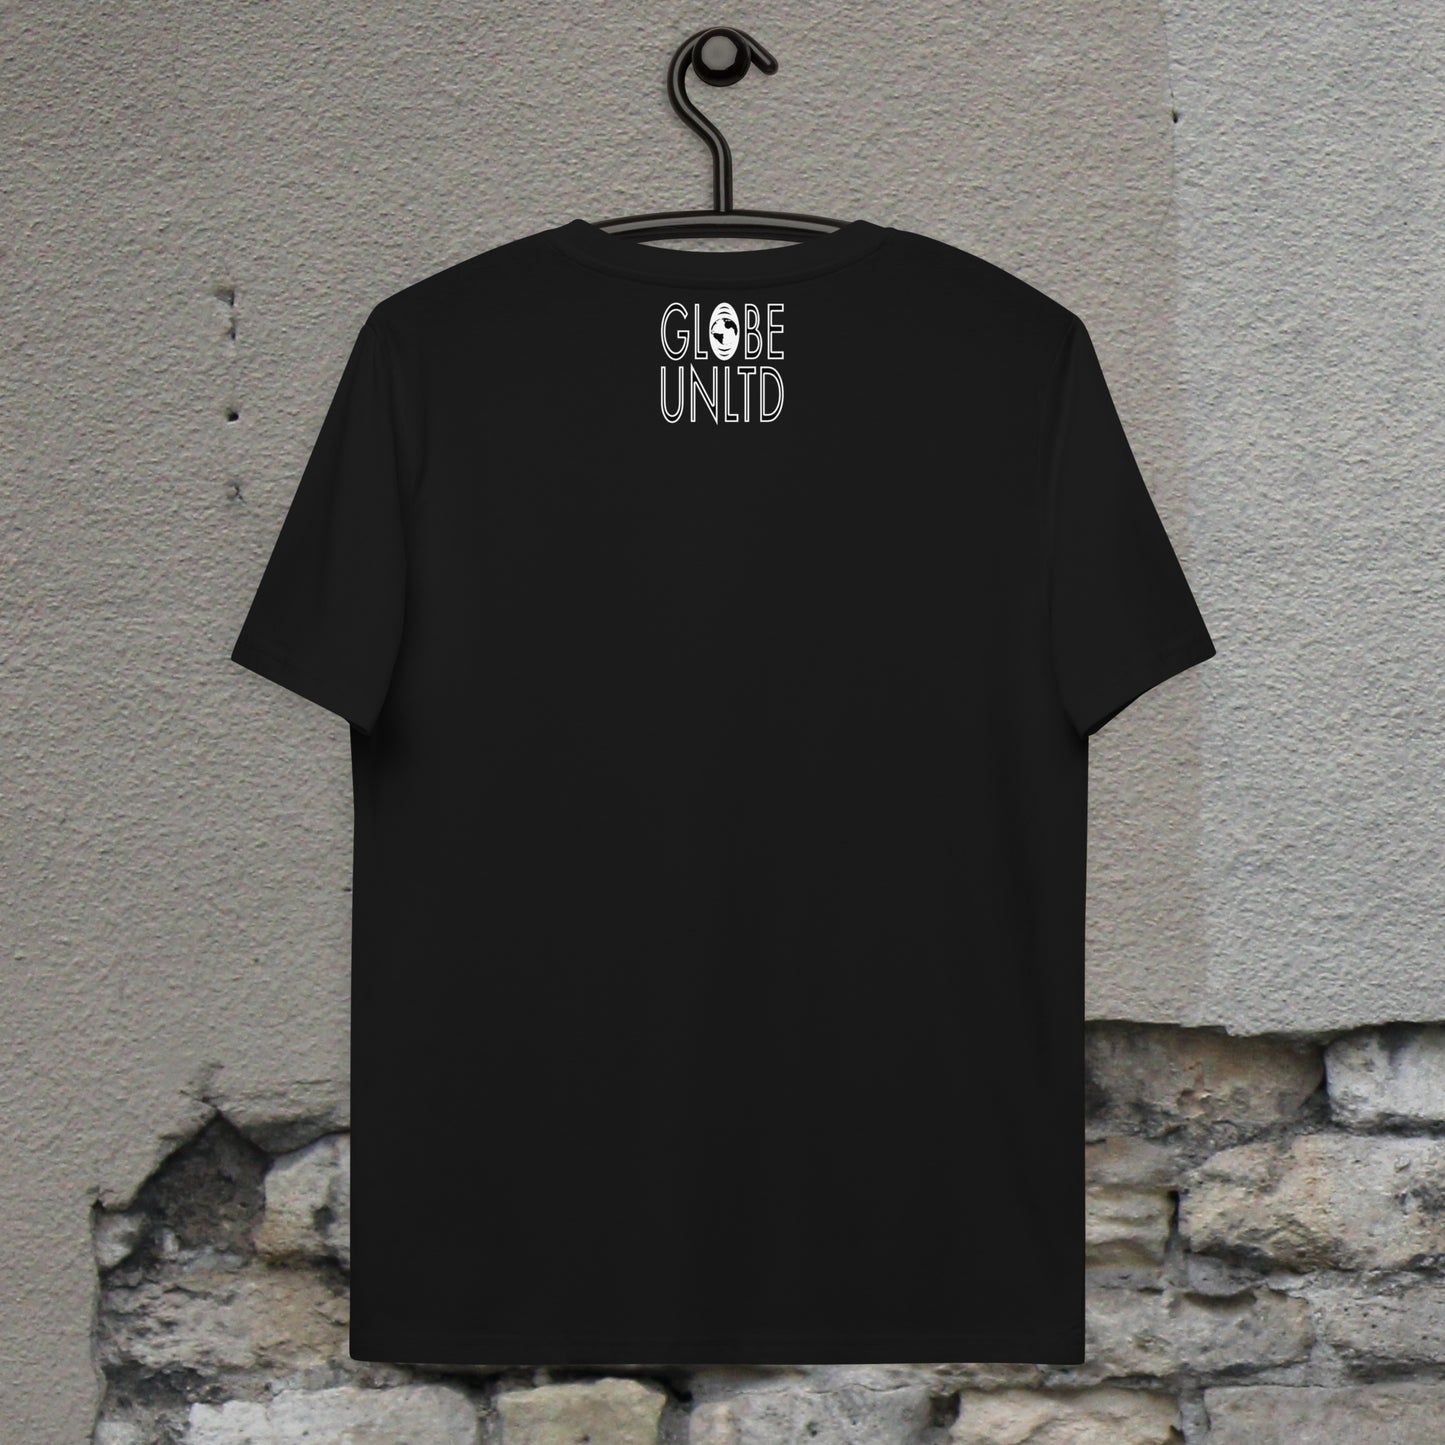 Globe UNLTD Paris PAR Graffiti 100% Organic Cotton T-Shirt in Black. Back Facing on Clothes Hanger.